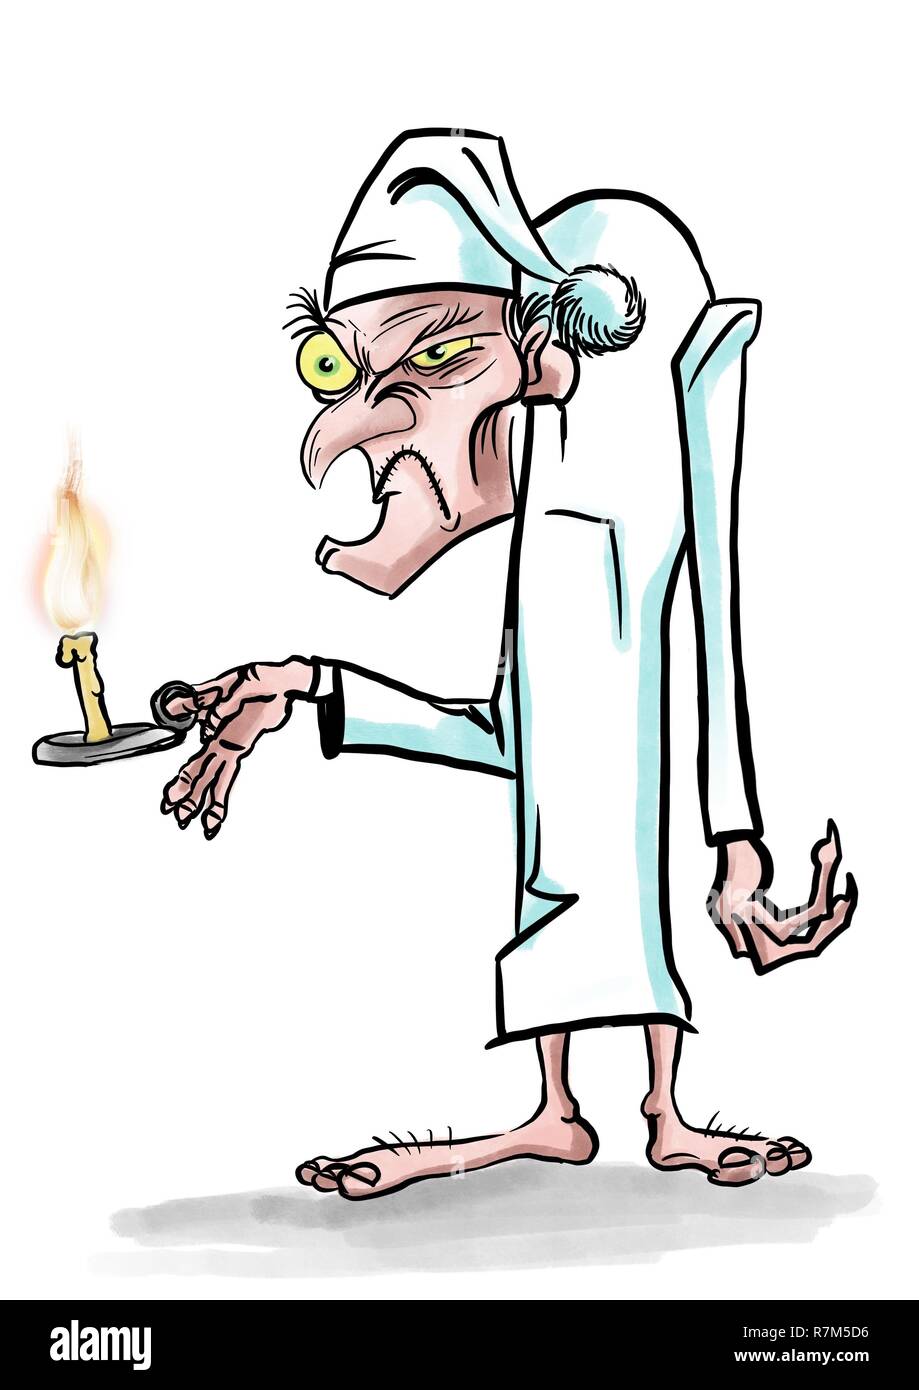 Ebenezer Scrooge cartoon character illustrated mascot Stock Photo - Alamy